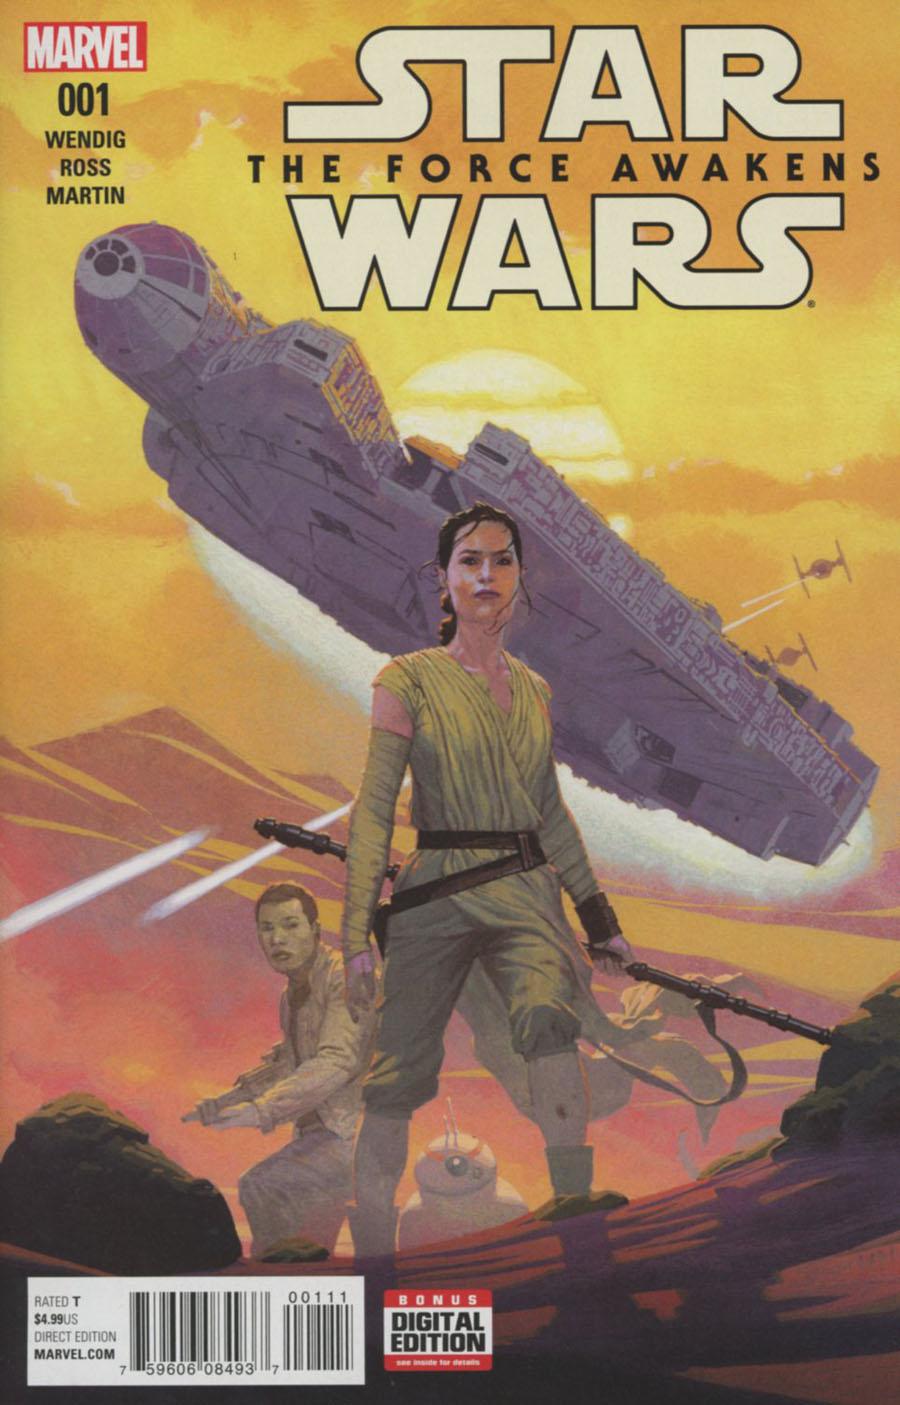 Star Wars Episode VII The Force Awakens Adaptation Vol. 1 #1